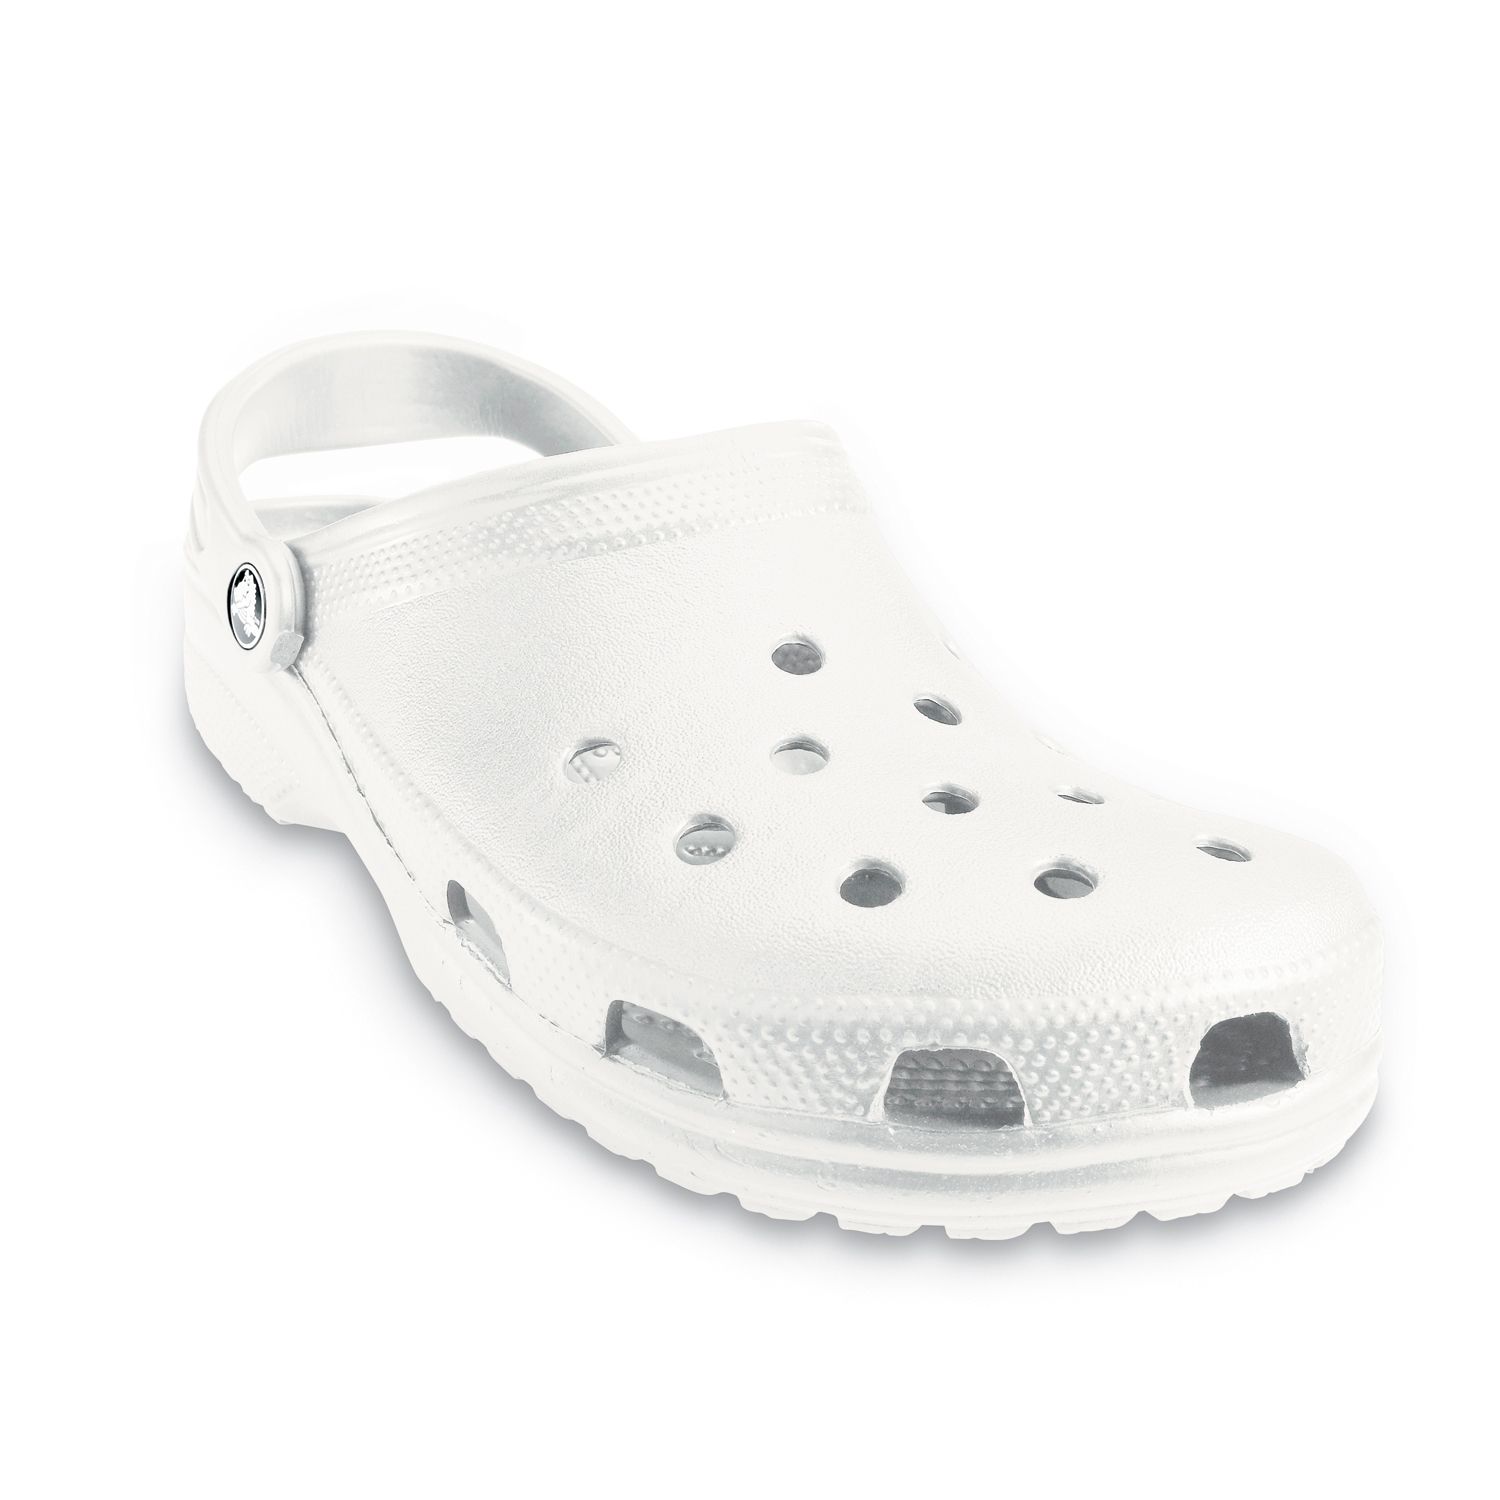 Crocs Classic Adult Clogs